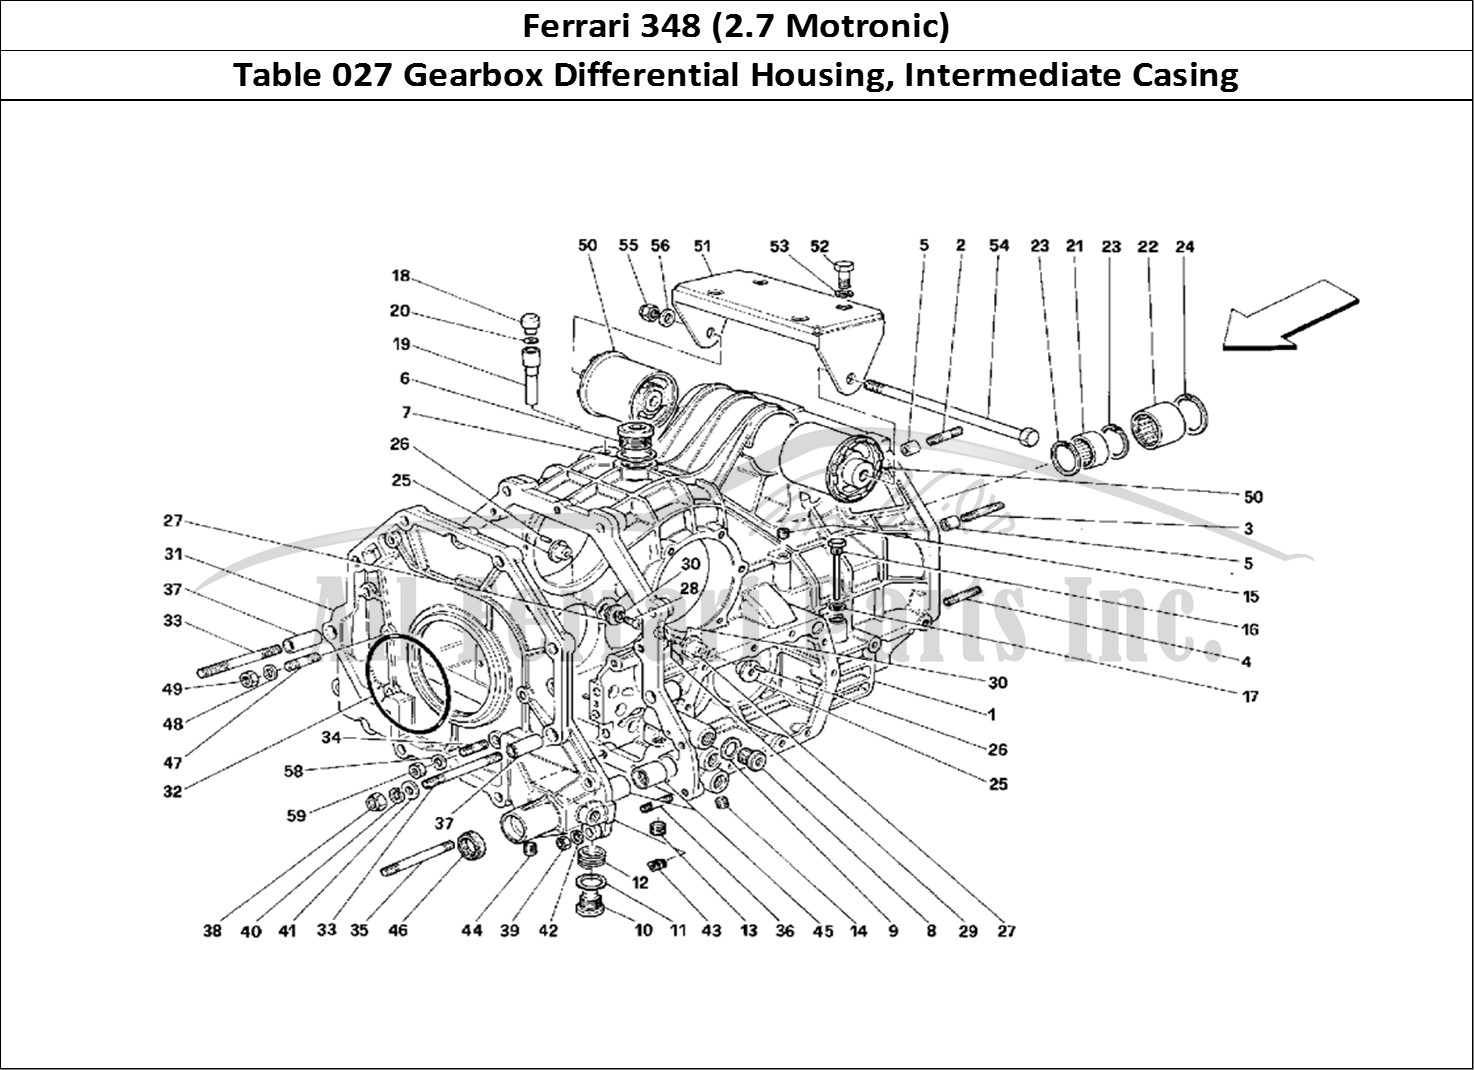 Ferrari Parts Ferrari 348 (2.7 Motronic) Page 027 Gearbox Differential Hous